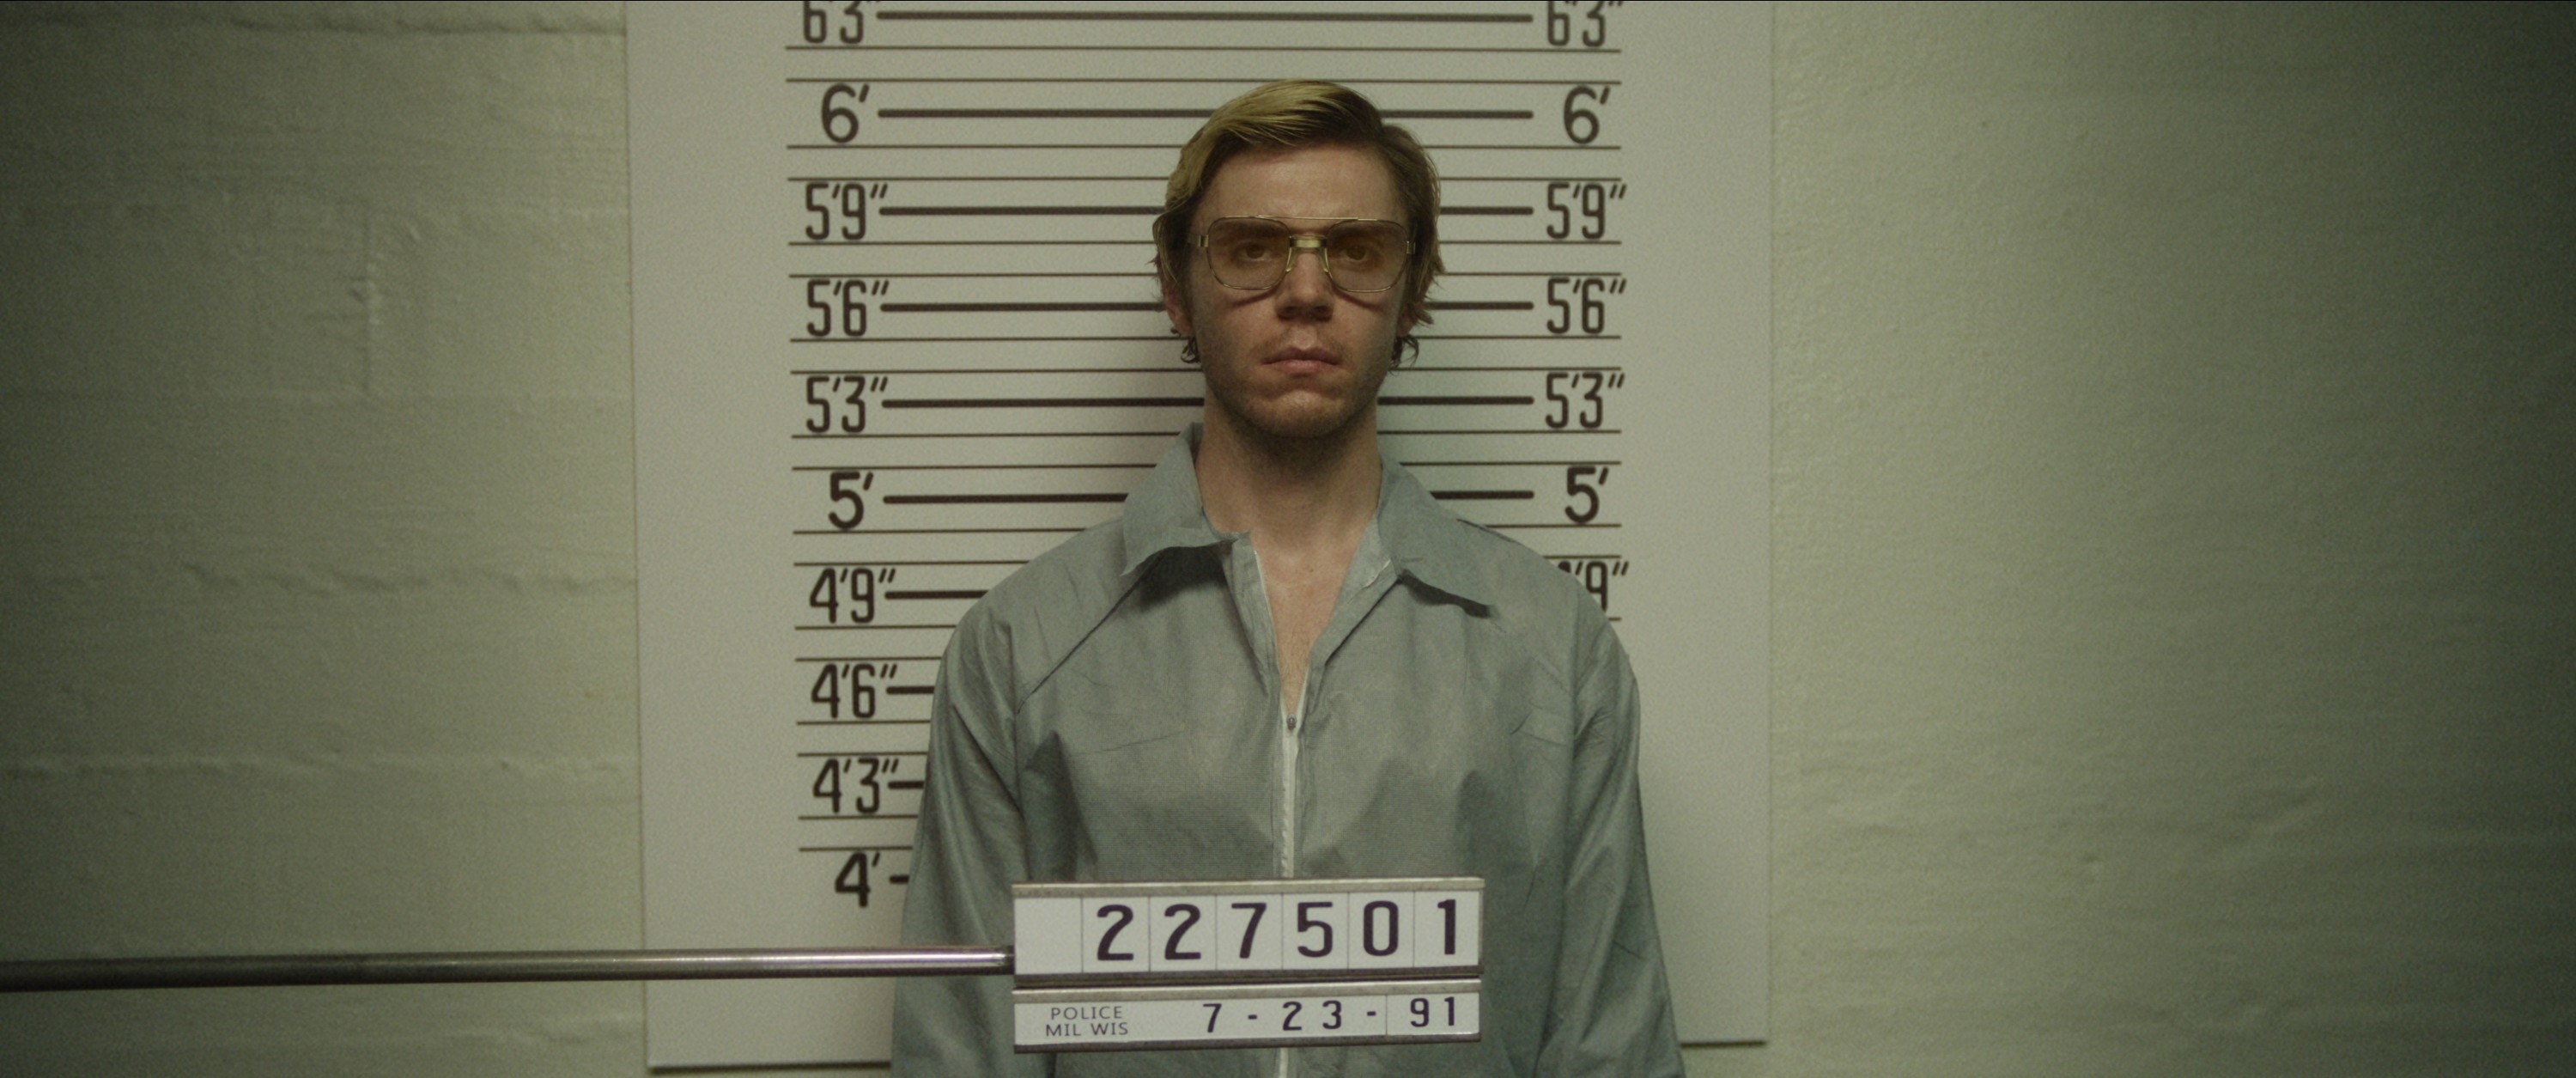 Evan Peters as Jeffrey Dahmer getting his mugshot taken